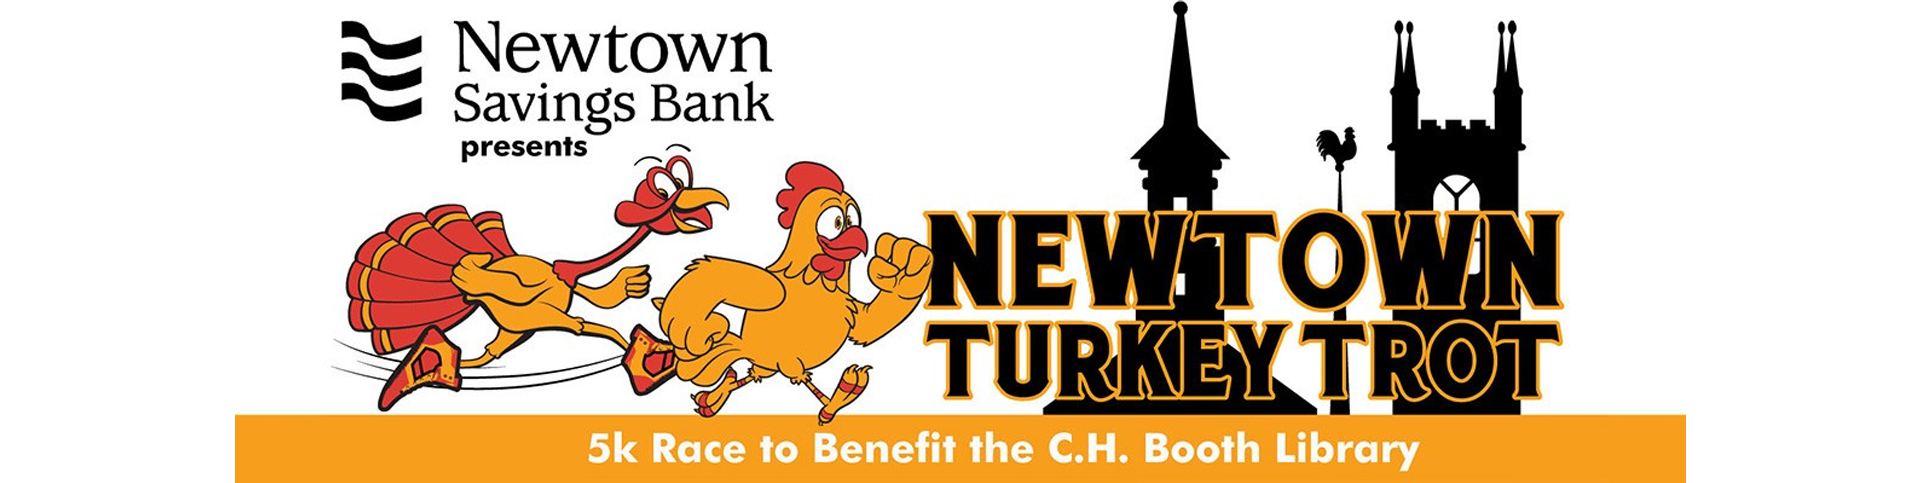 Newtown Turkey Trot logo